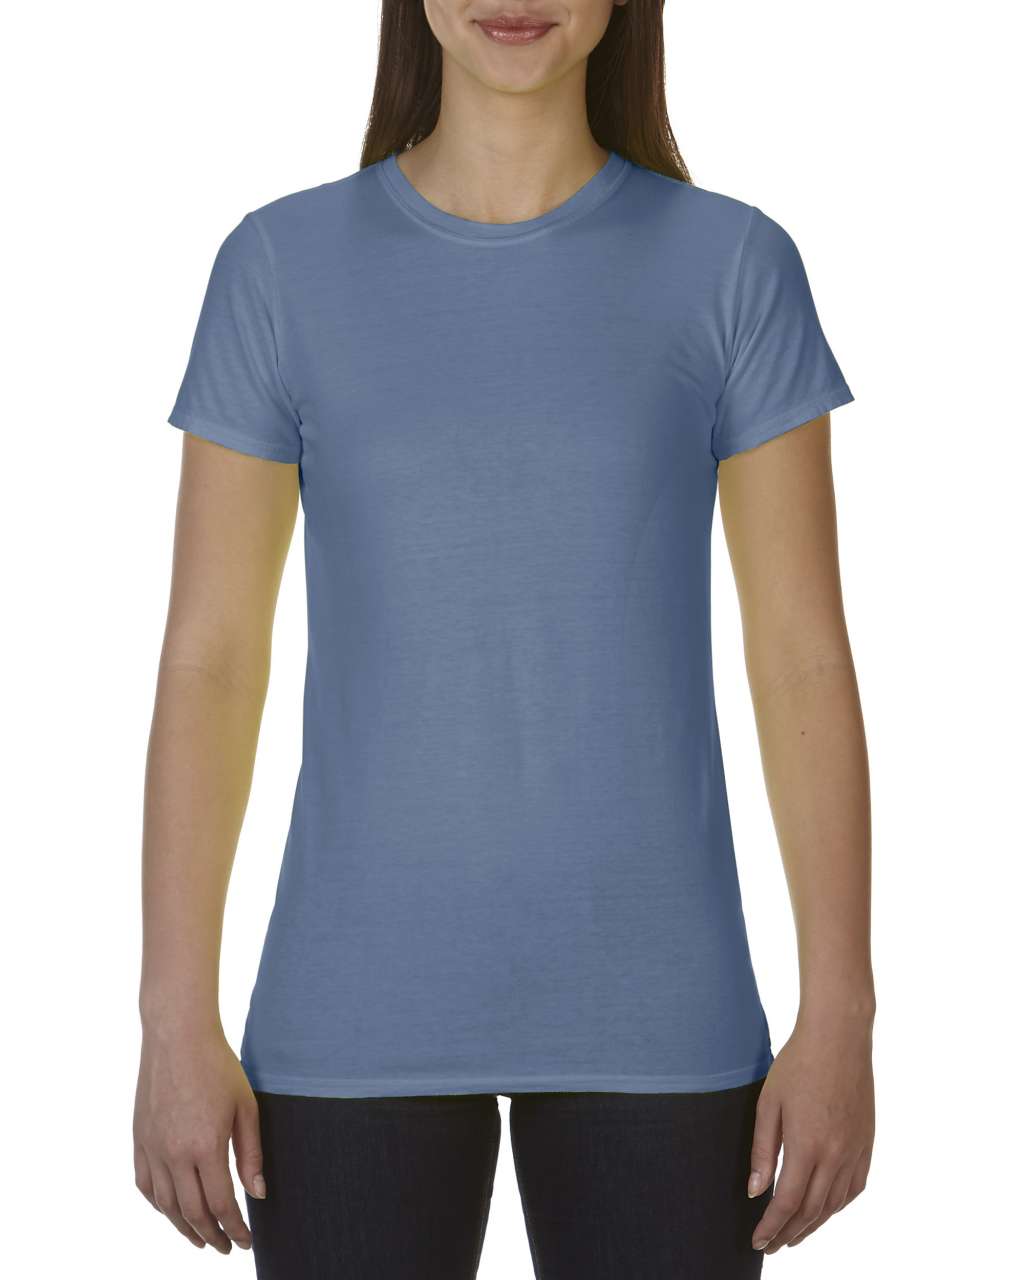 Comfort Colors Damen T-Shirt Oberteil Frauen Kurzarm Tshirt Rundhals